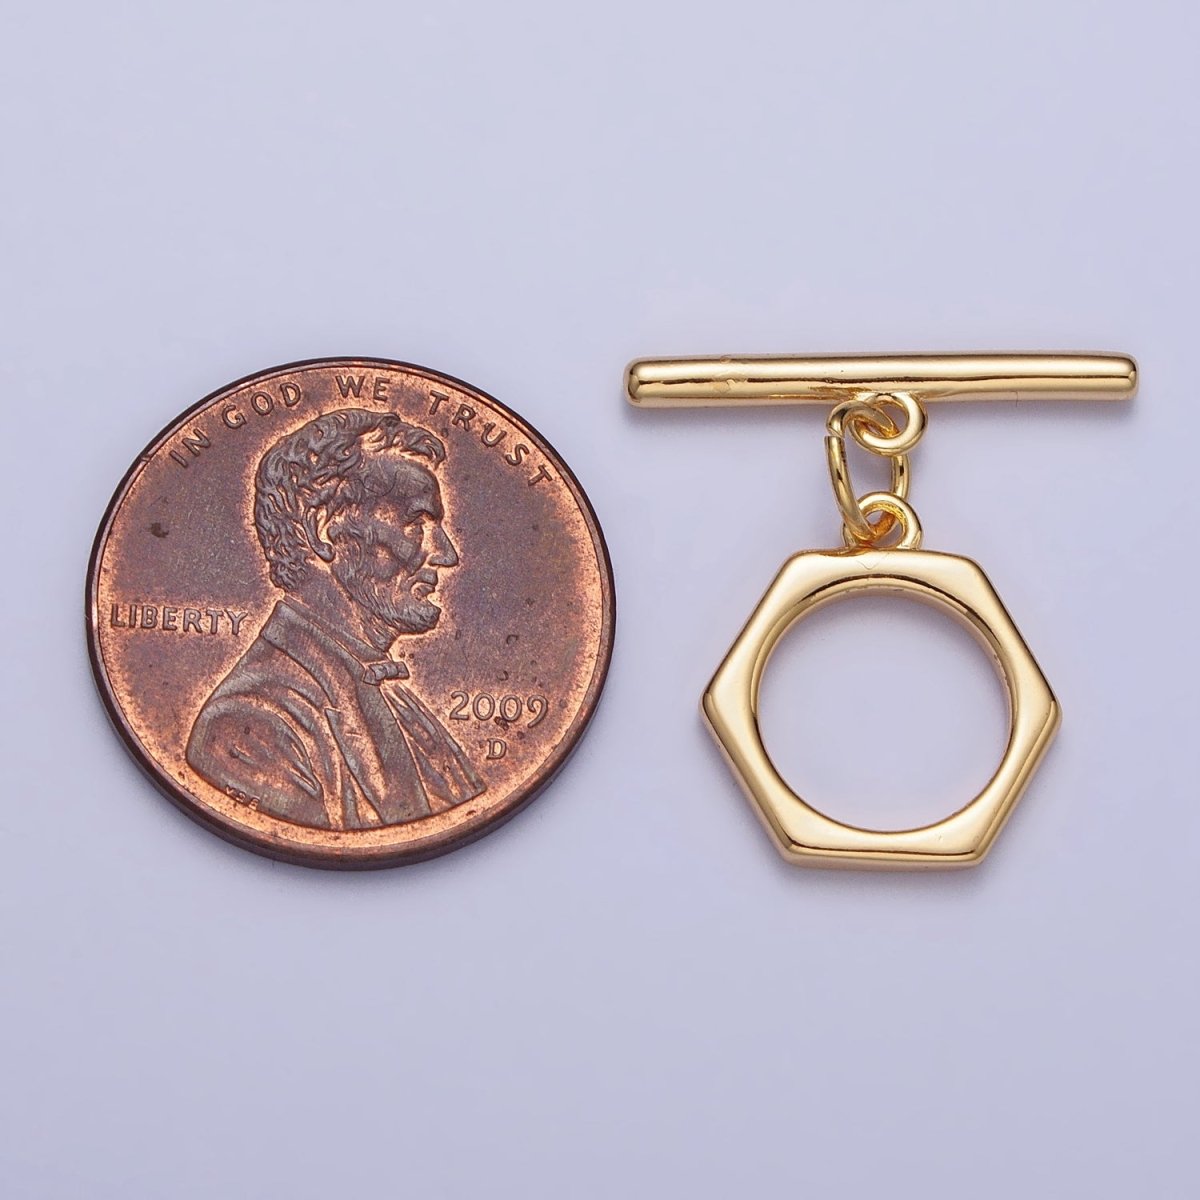 Minimalist Hexagonal Toggle Clasps Jewelry Closure Supply in Gold & Silver | Z-103 Z-104 - DLUXCA